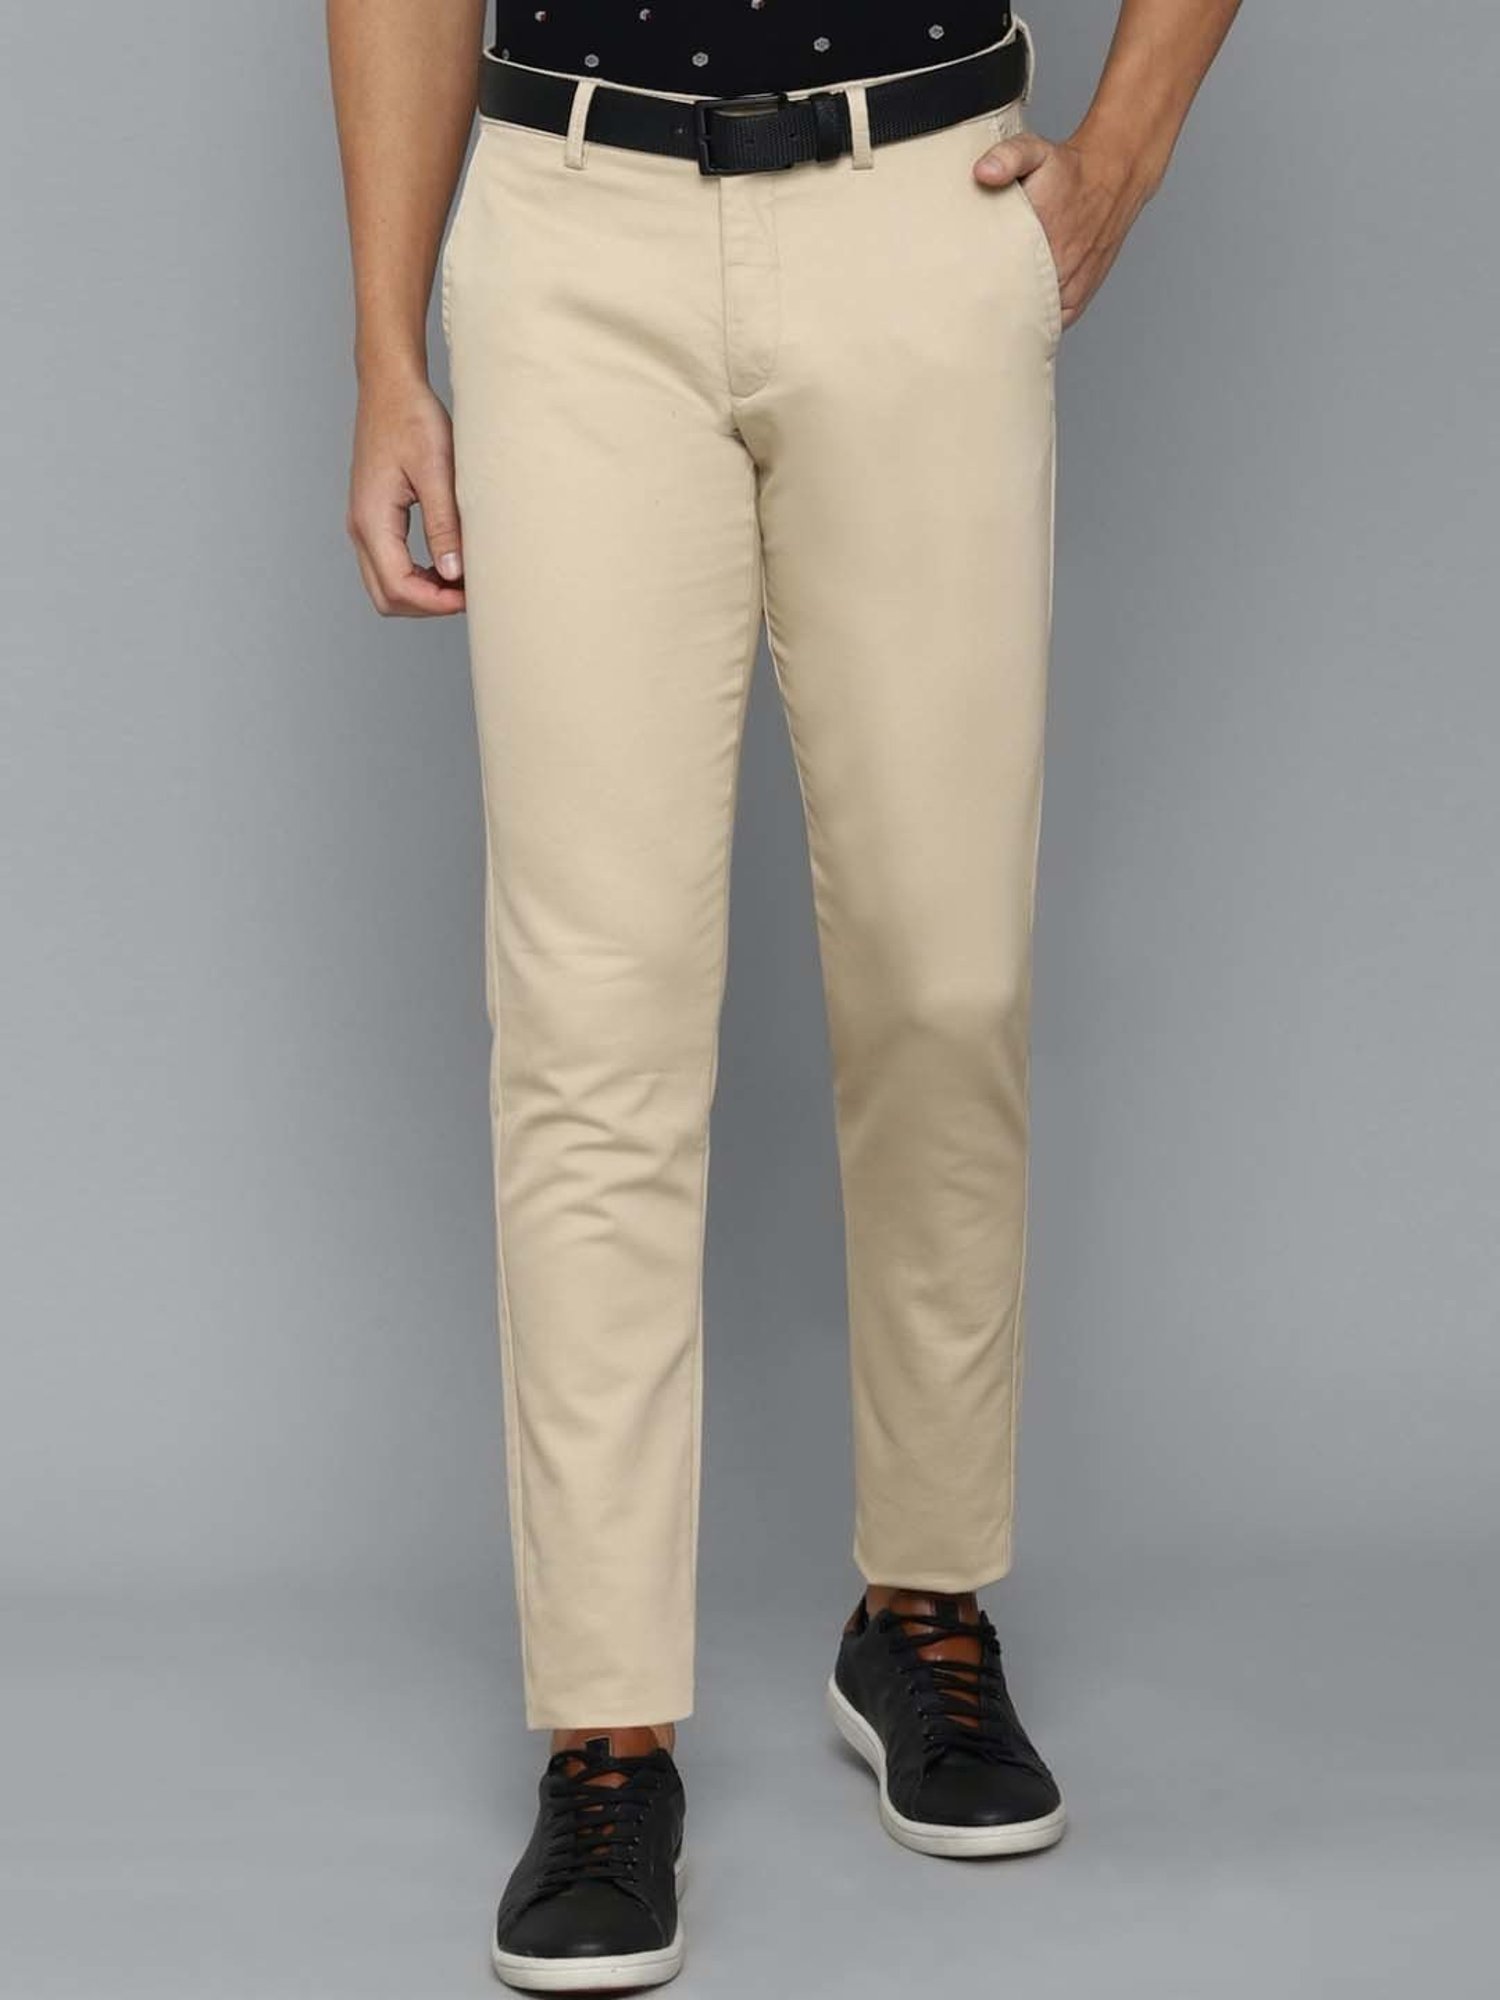 Buy Olive Trousers  Pants for Men by ALLEN SOLLY Online  Ajiocom